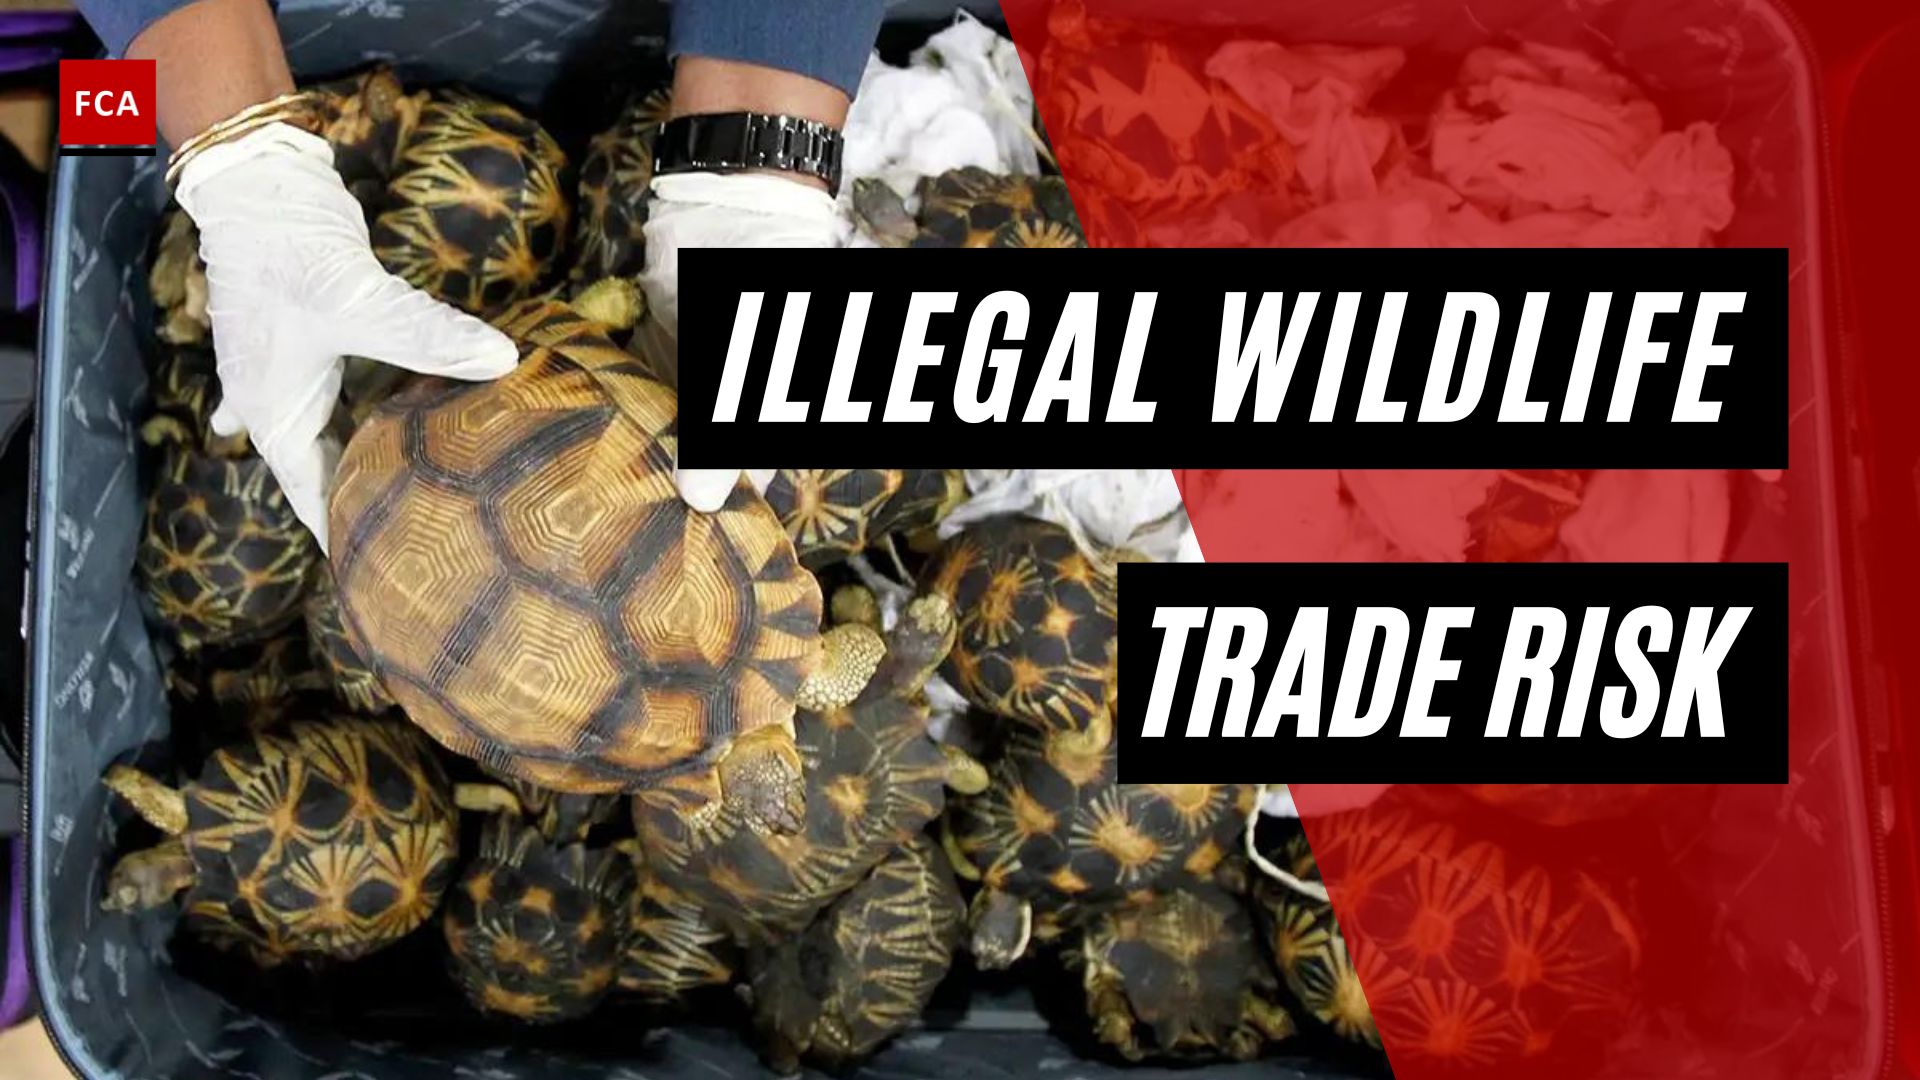 Illegal Wildlife Trade Risk